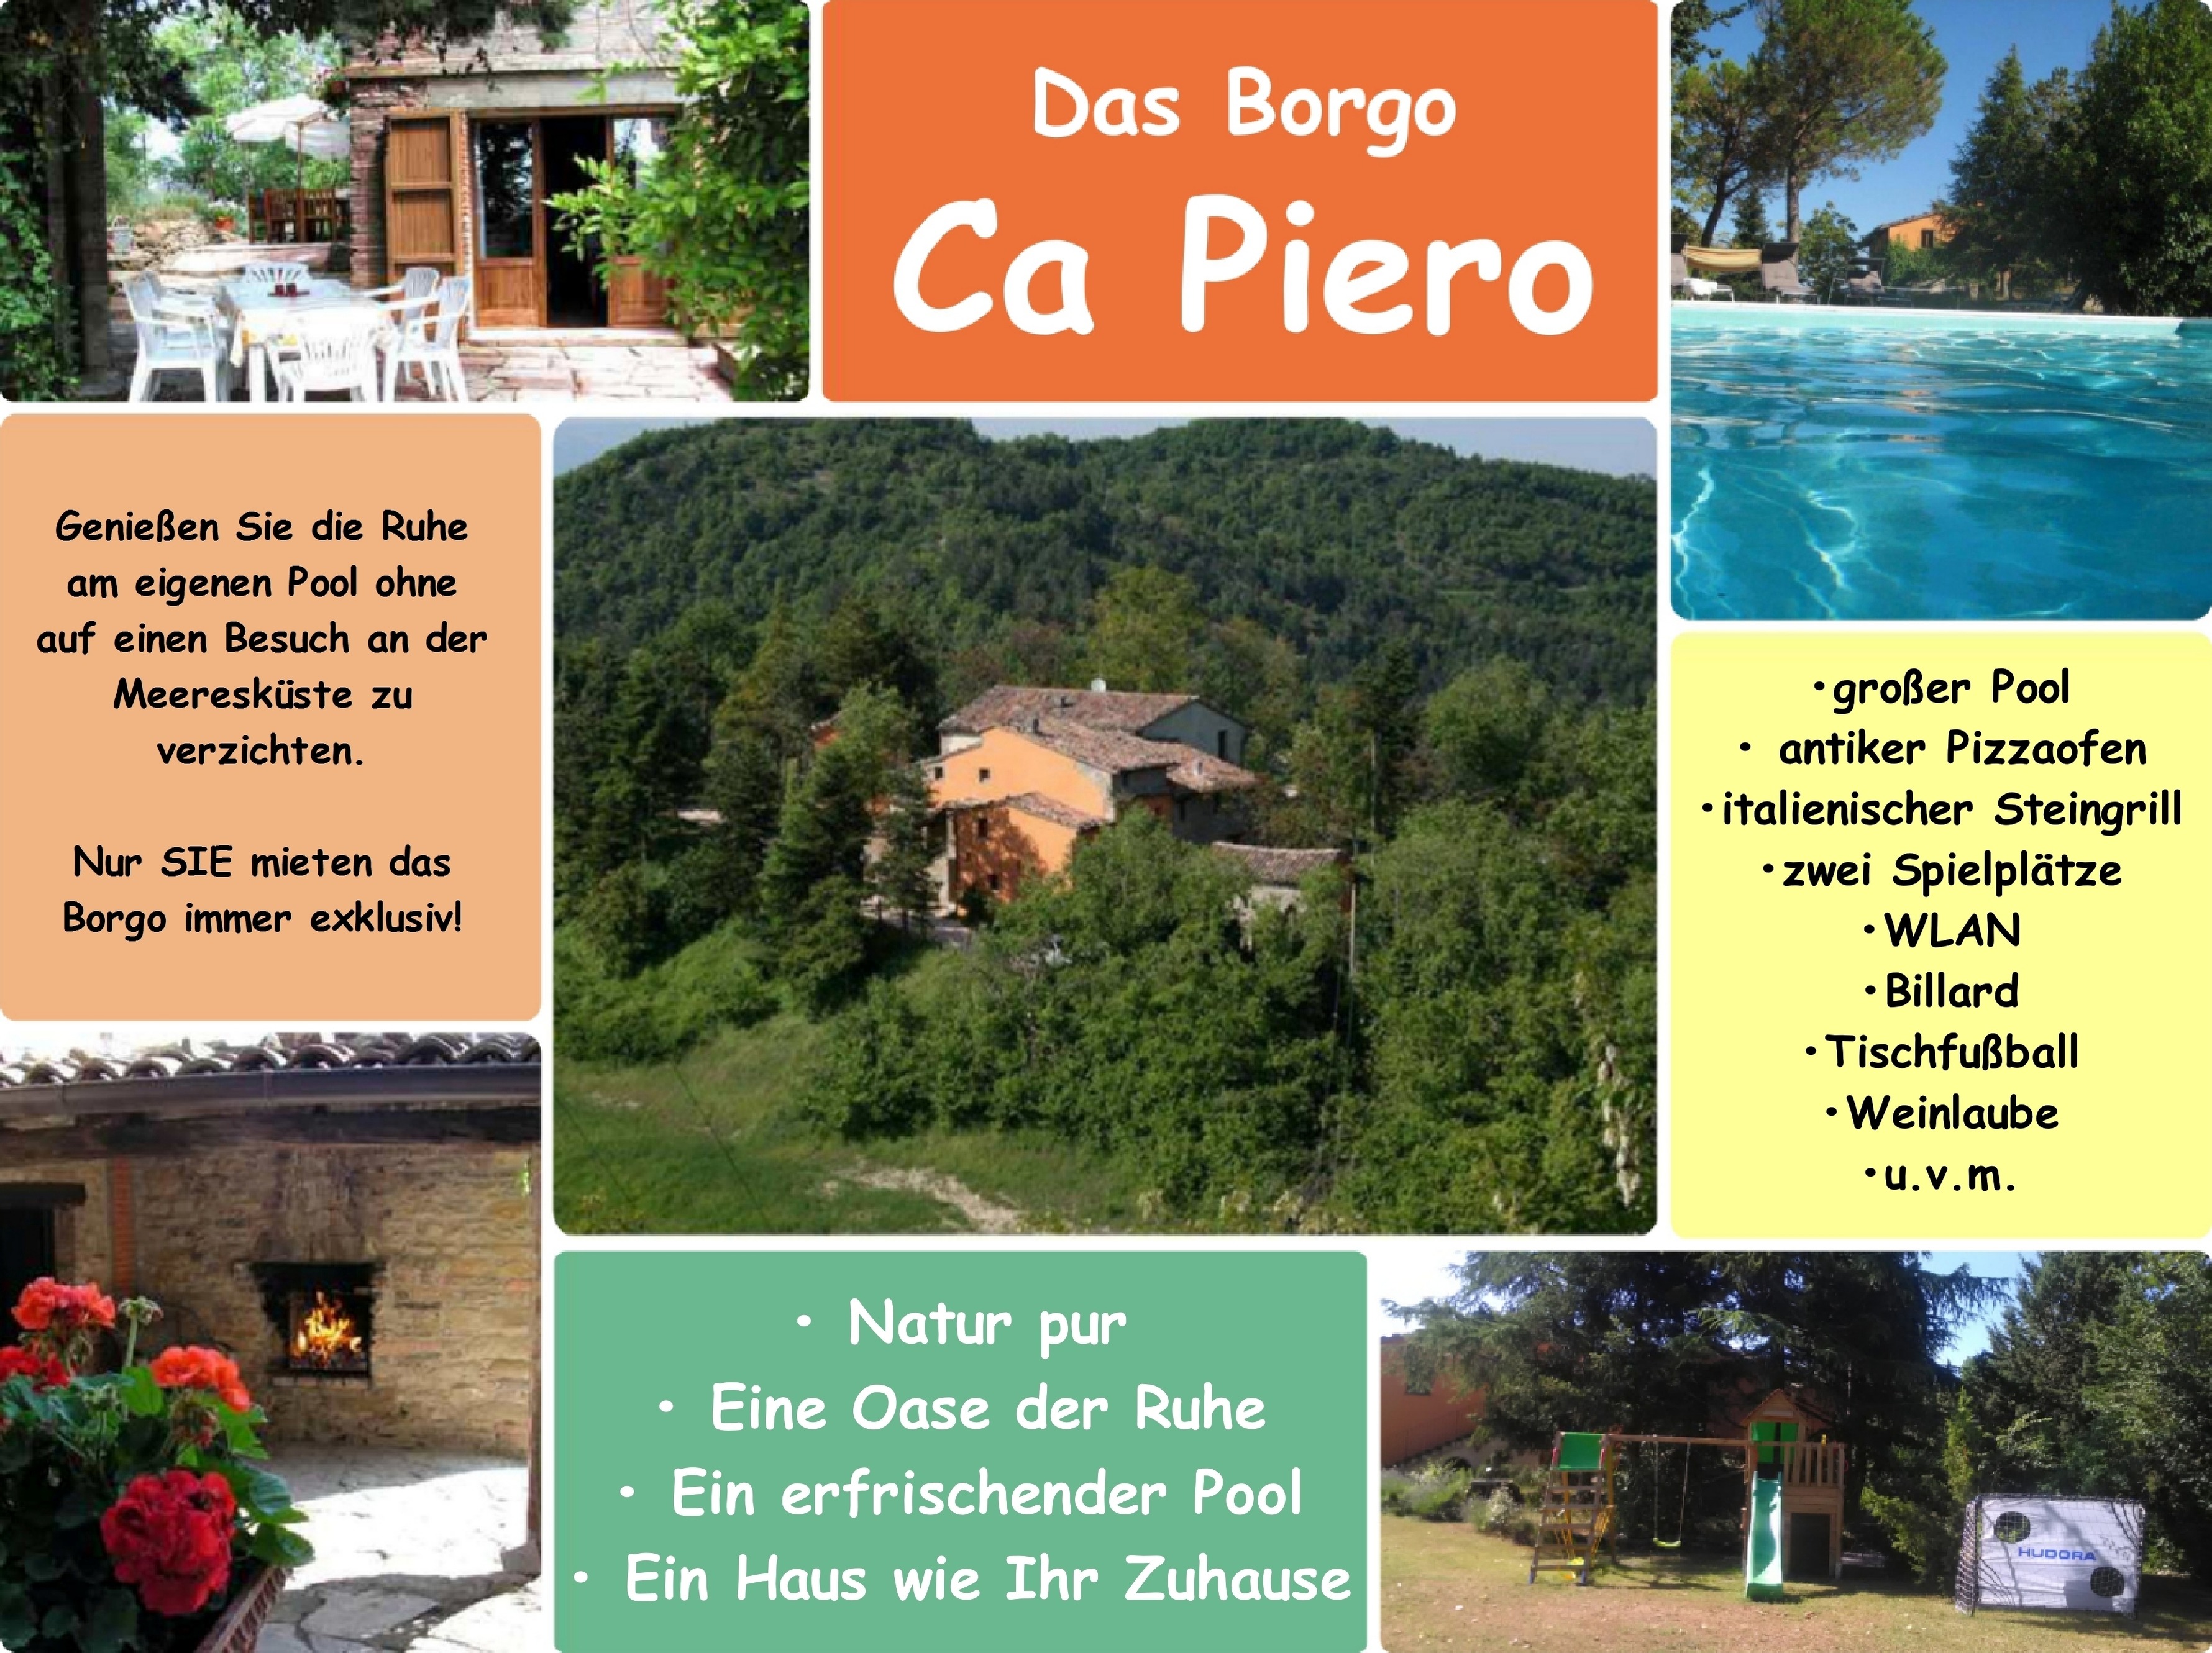 Ferienhaus Ca Piero mit Pool bis 12 Personen Ferienhaus in Italien